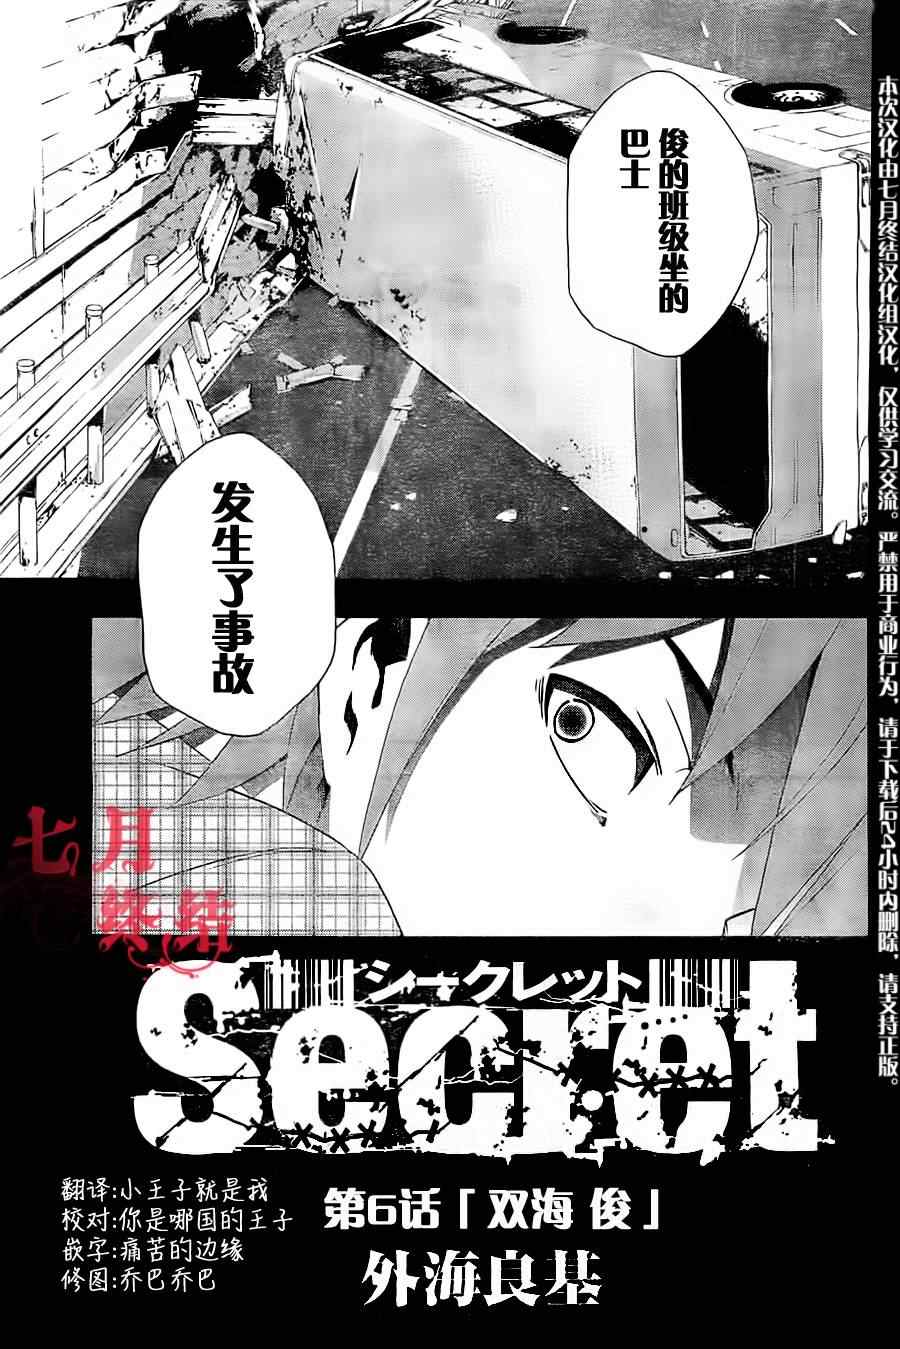 《secret》漫画 006集